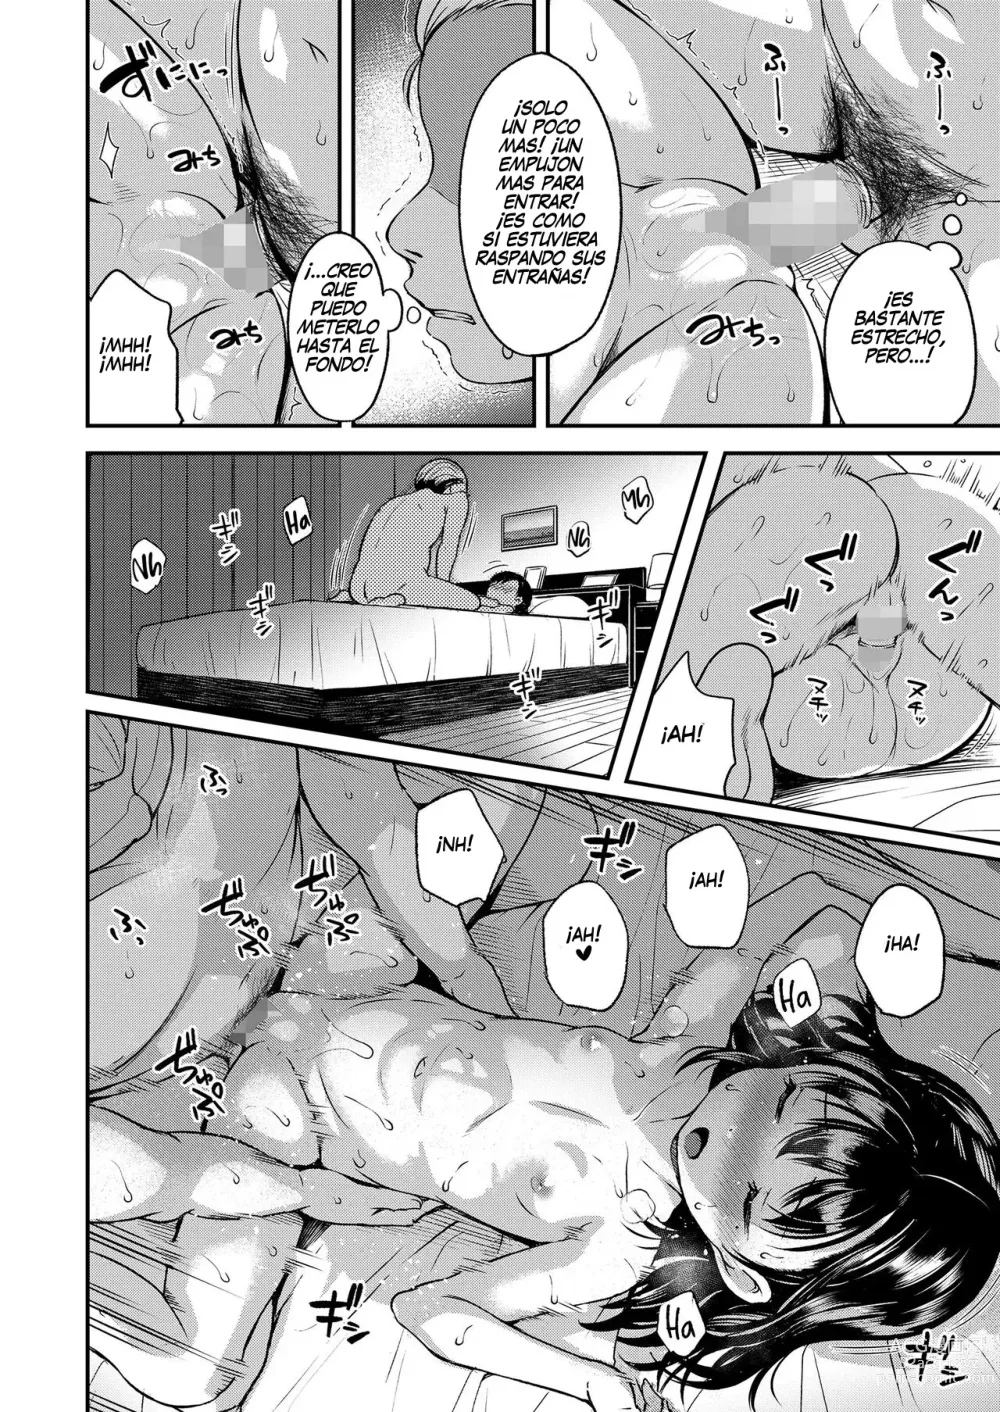 Page 26 of manga Pequeña Rompehogares #1